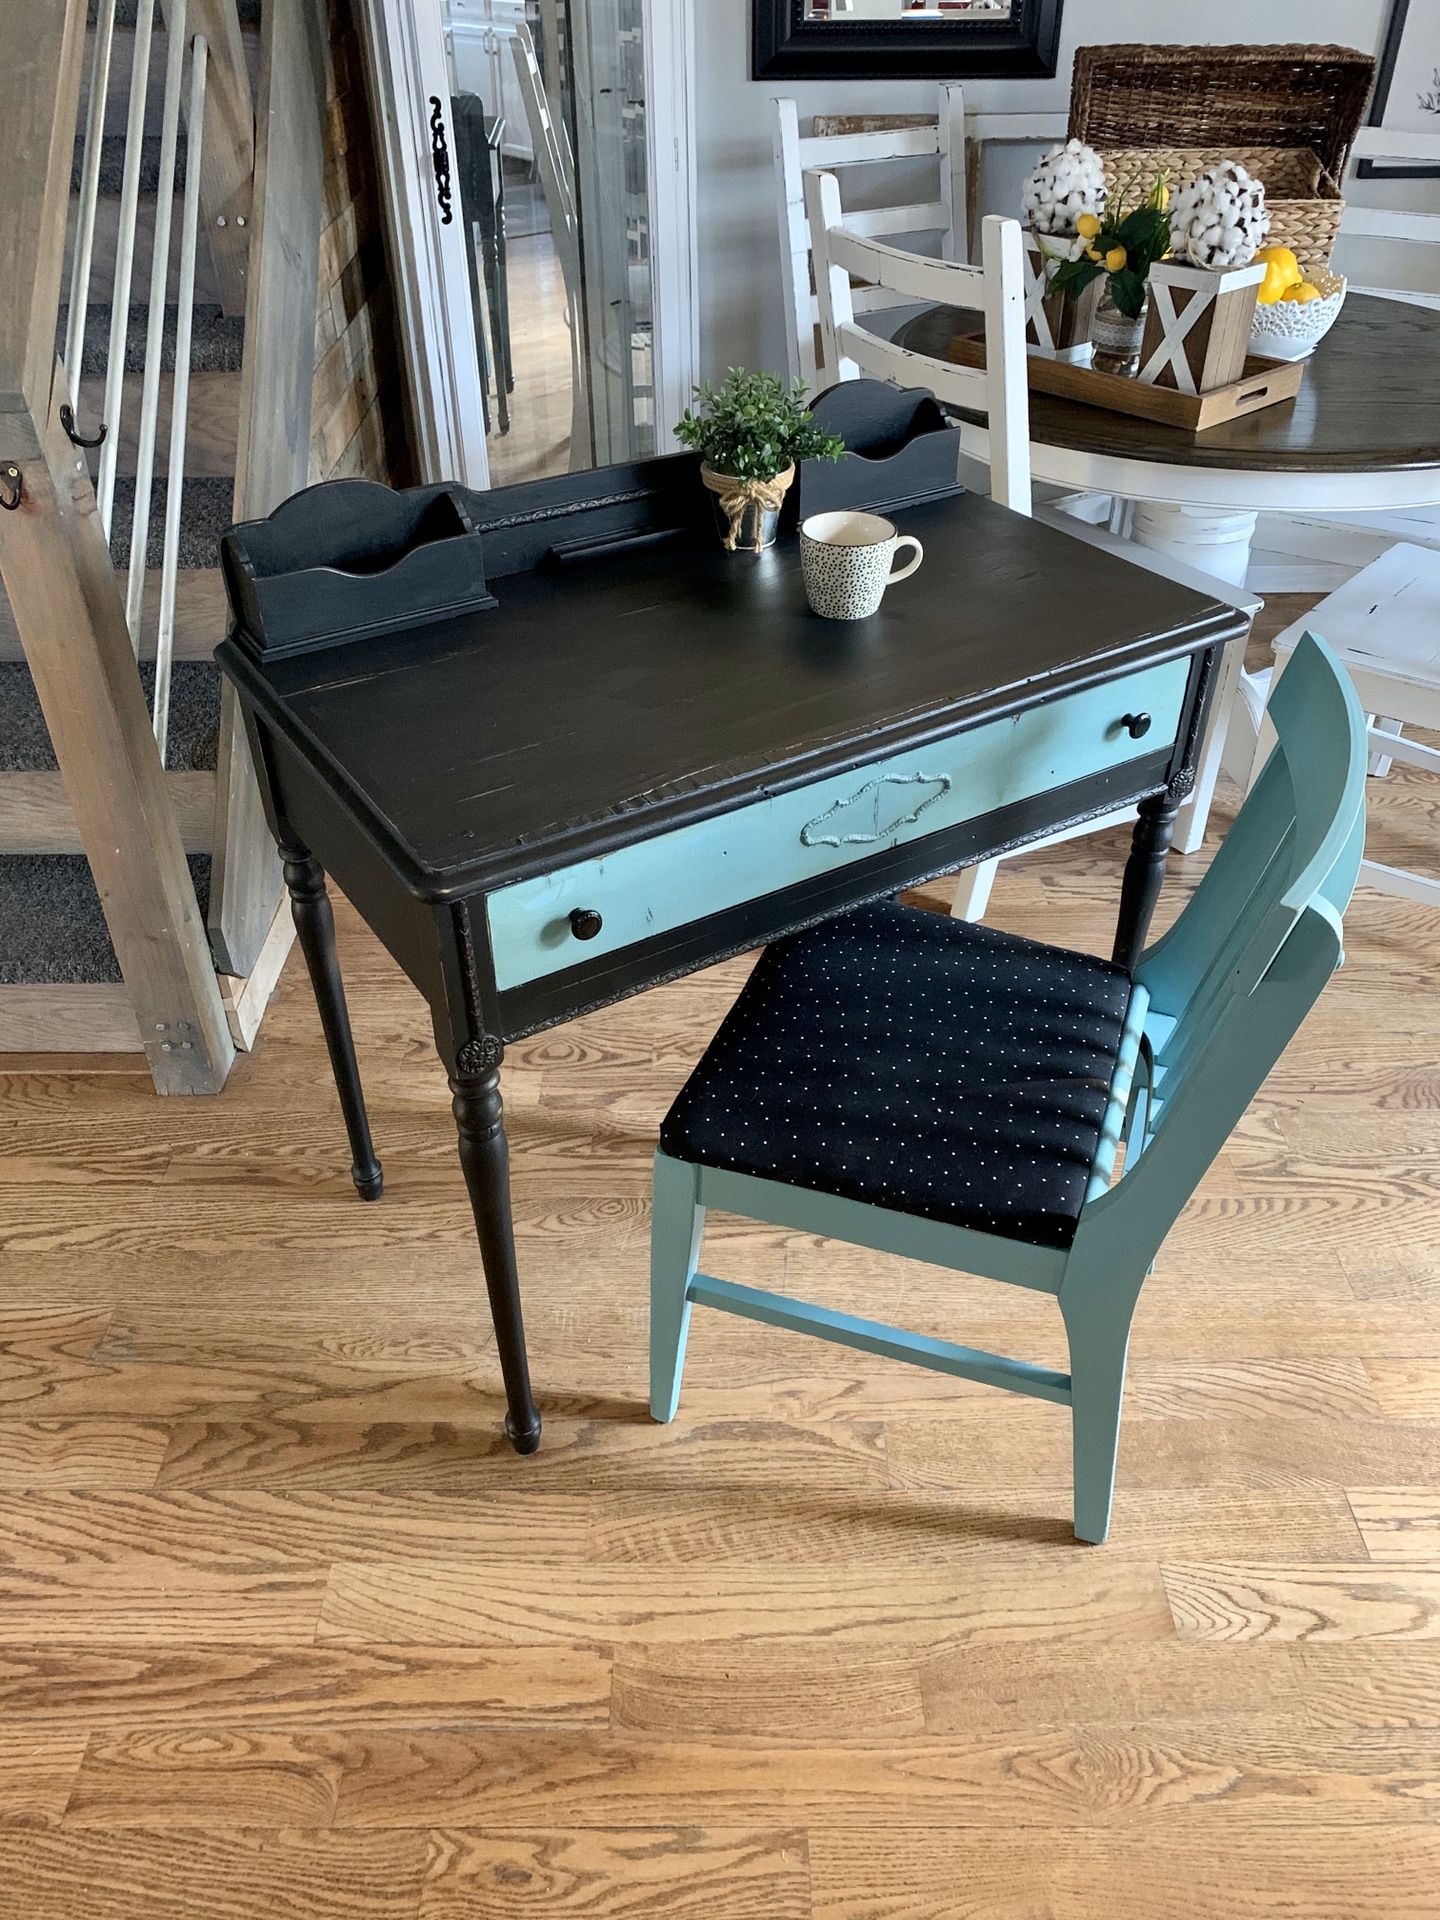 Shabby little desk and chair combo / vanity